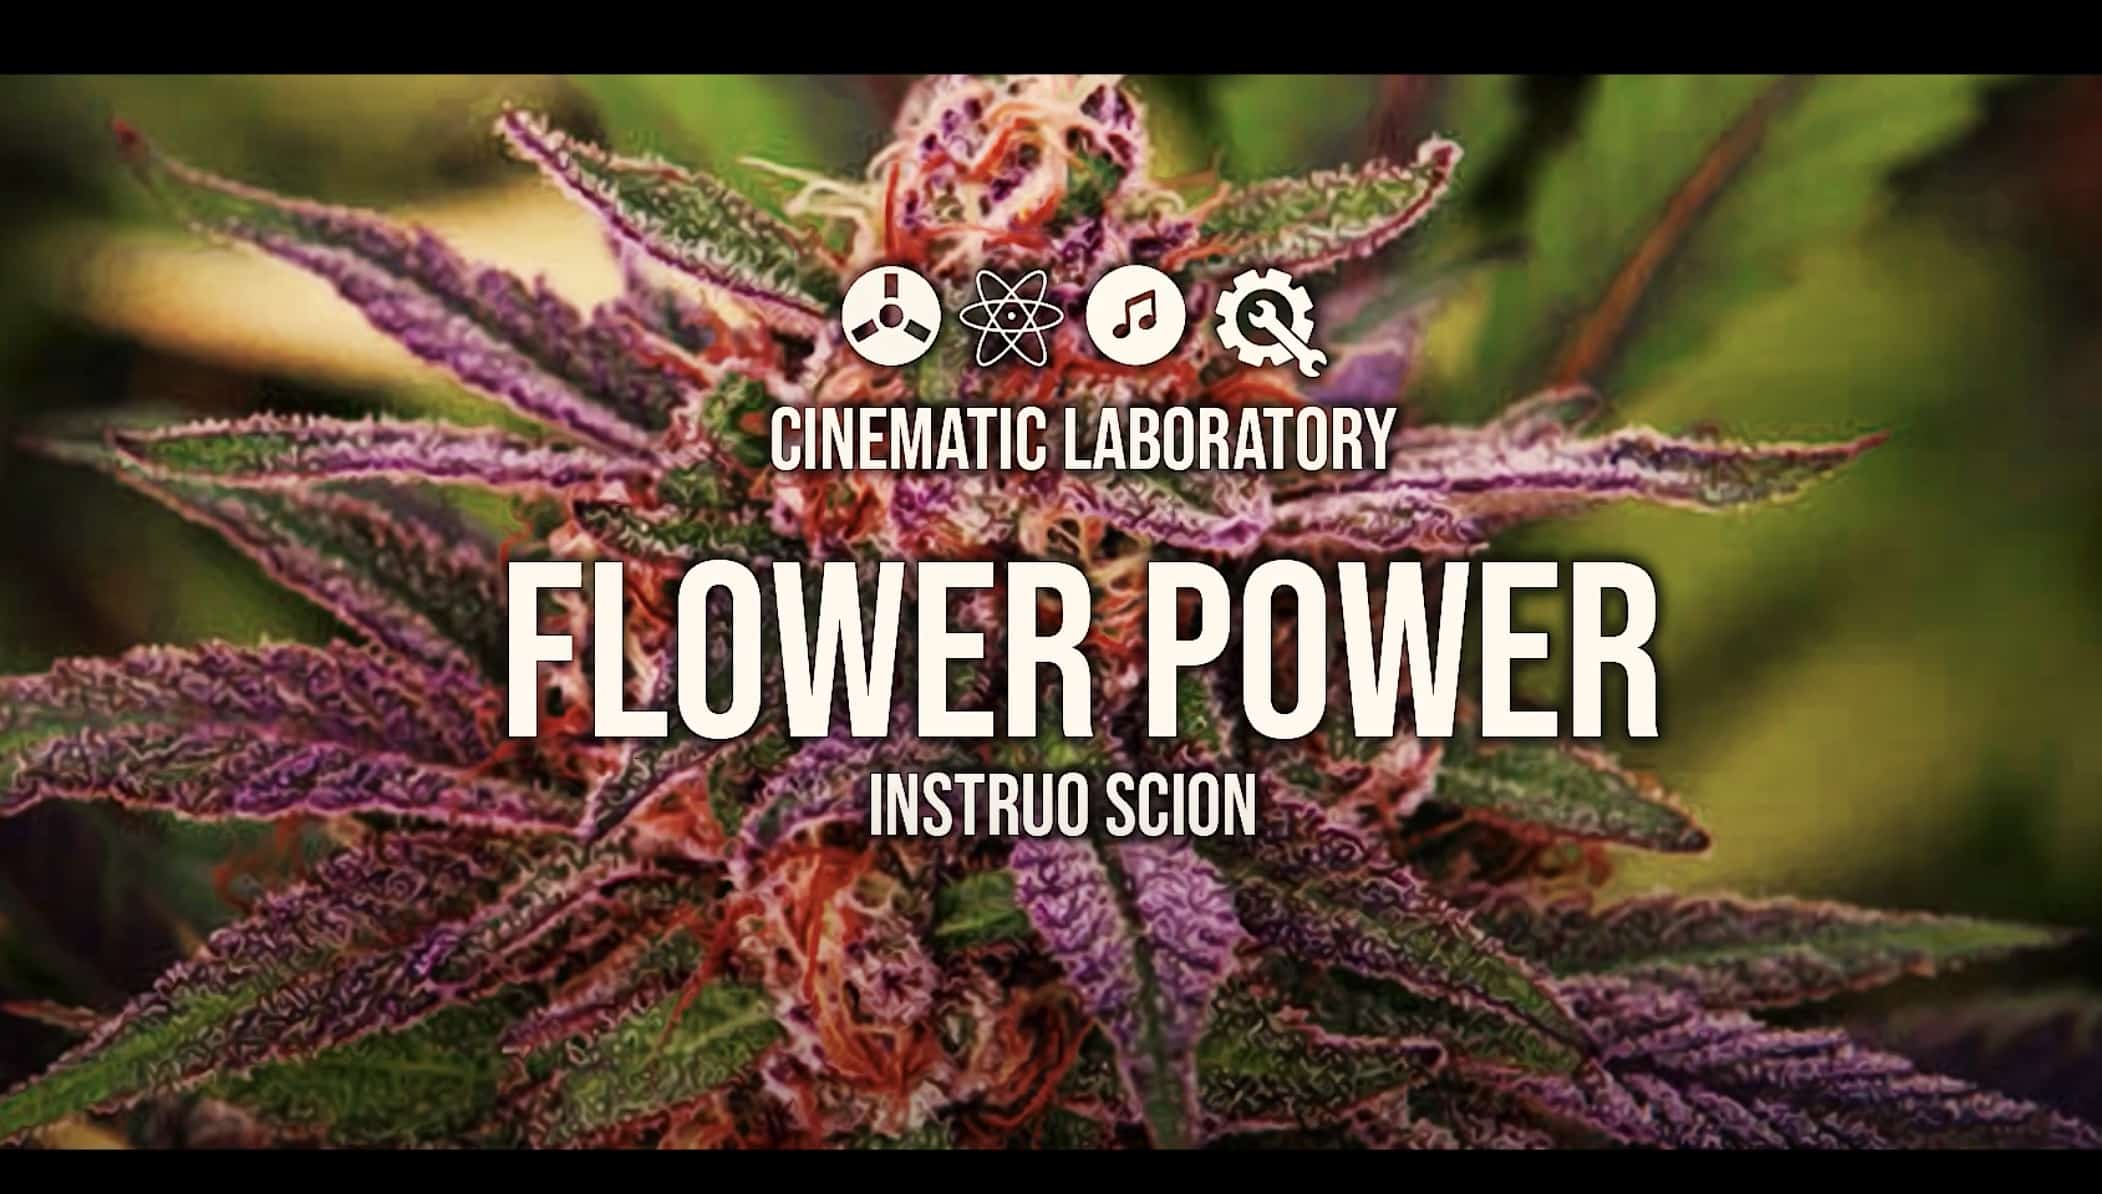 FlowerPower Instruo Scion